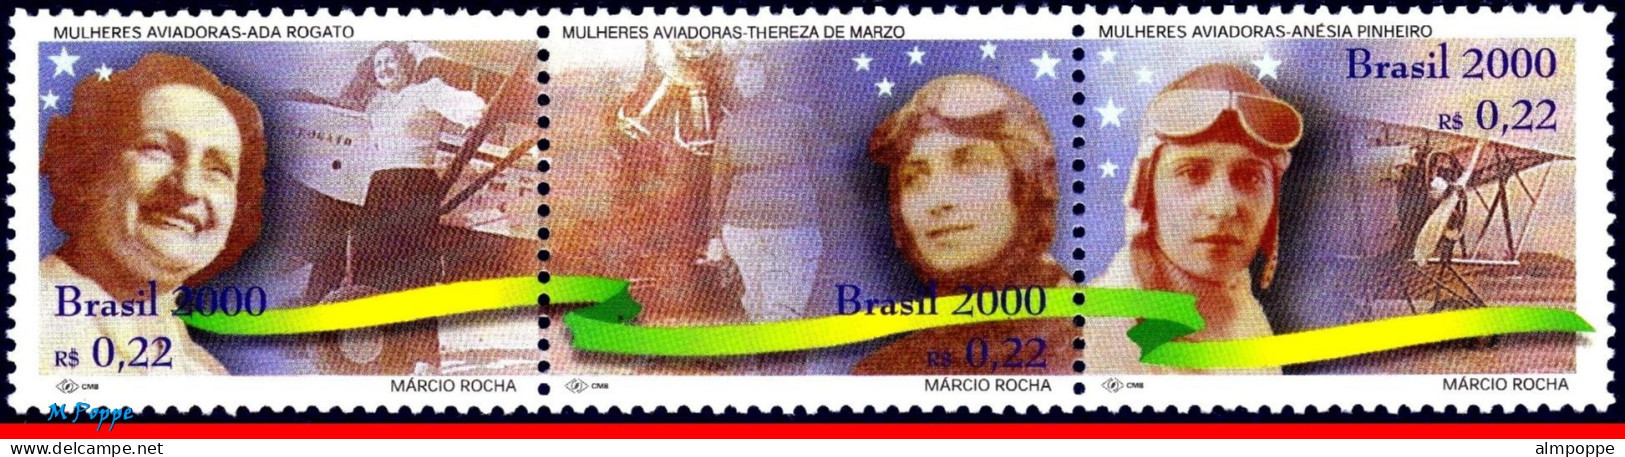 Ref. BR-2734 BRAZIL 2000 - AVIATRIXES, FEMALEAVIATORS, HISTORY, MI# 2995-97, SET MNH, PLANES, AVIATION 3V Sc# 2734 - Unused Stamps